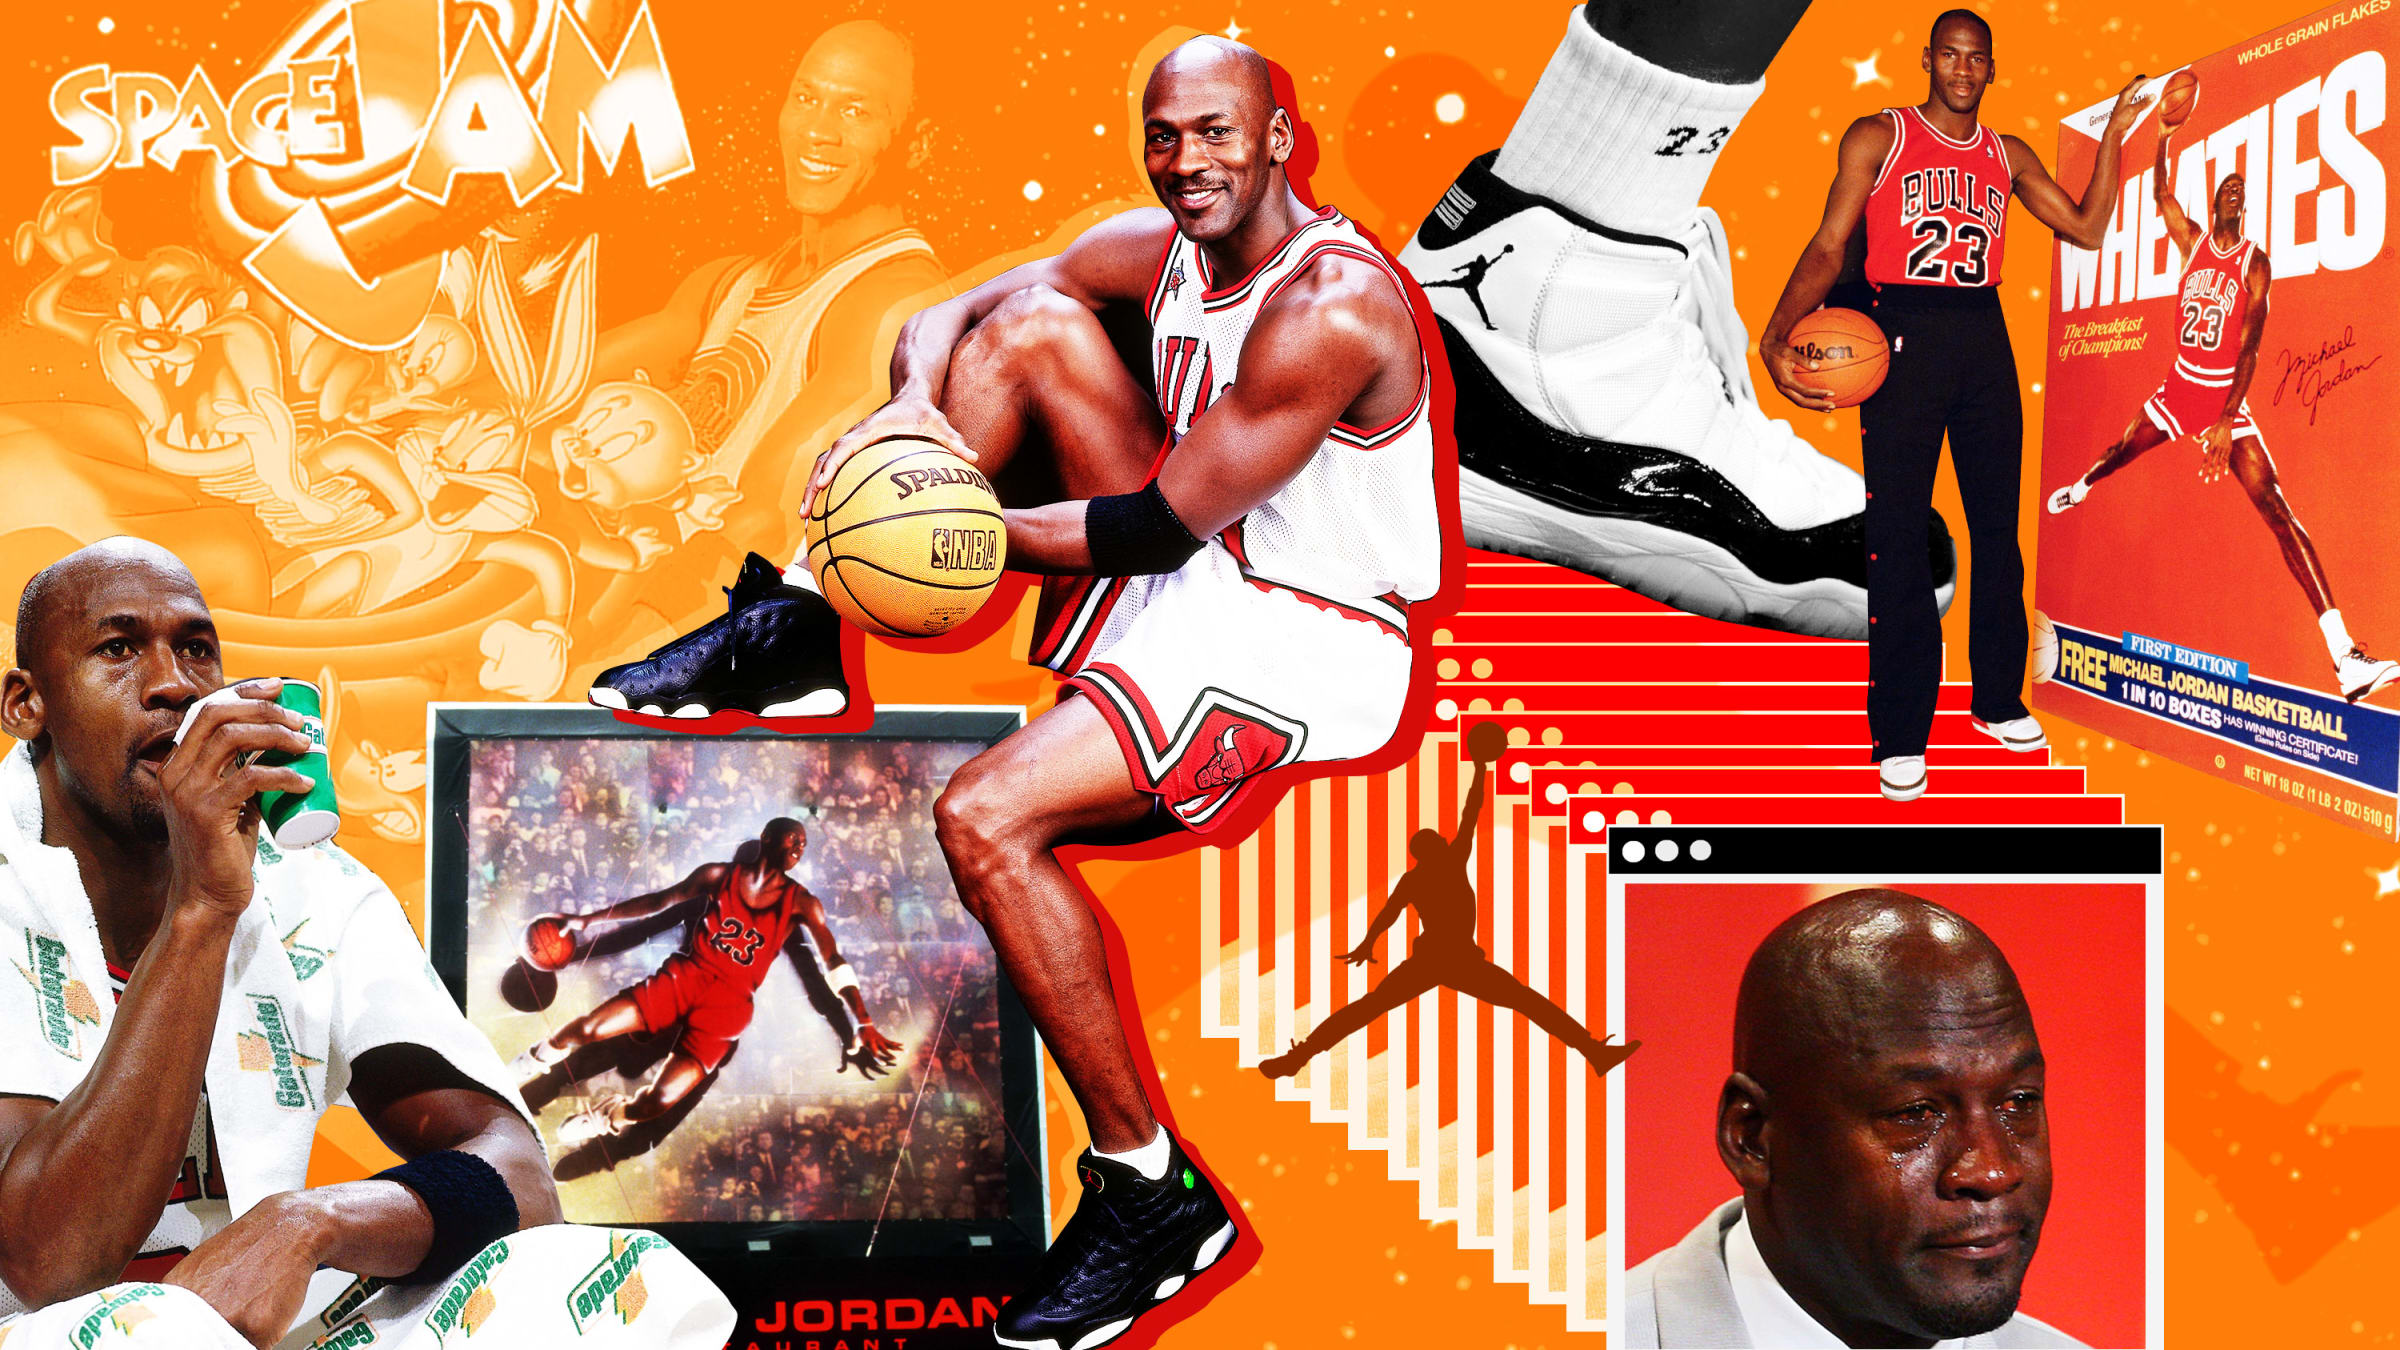 Stadium Goods on X: Michael Jordan's drive propelled him. But it